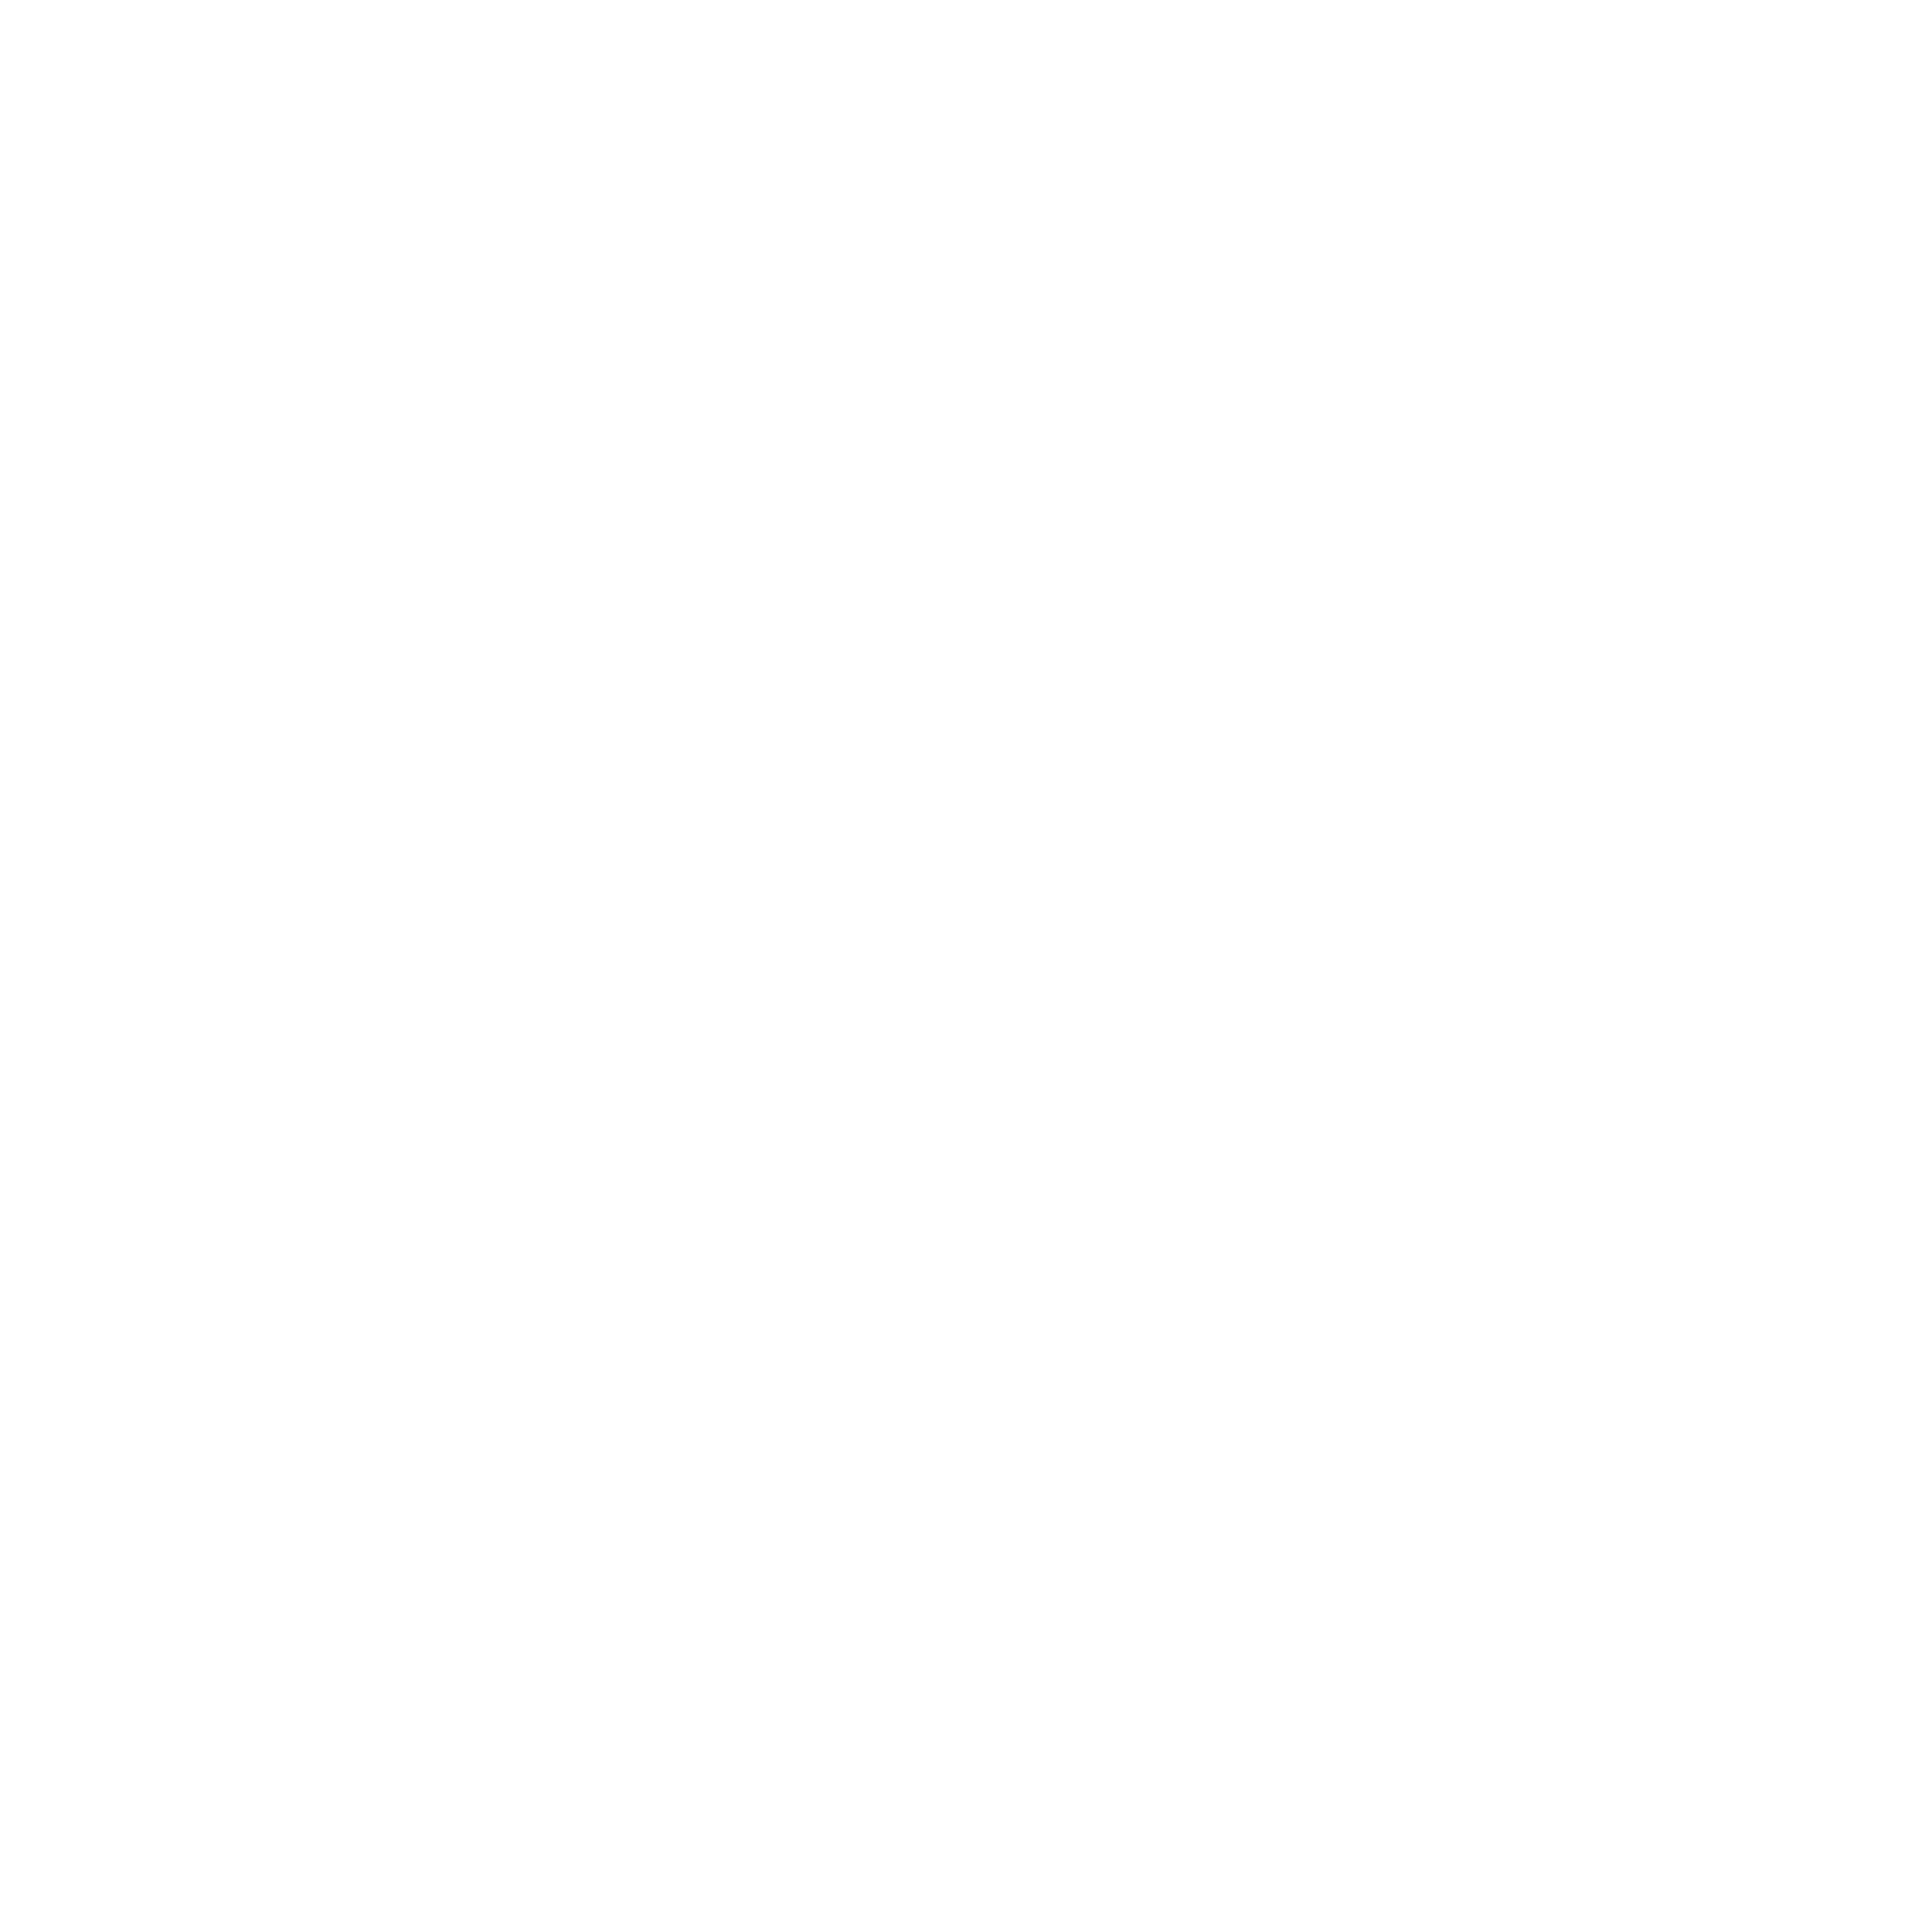 Houston Theological Seminary